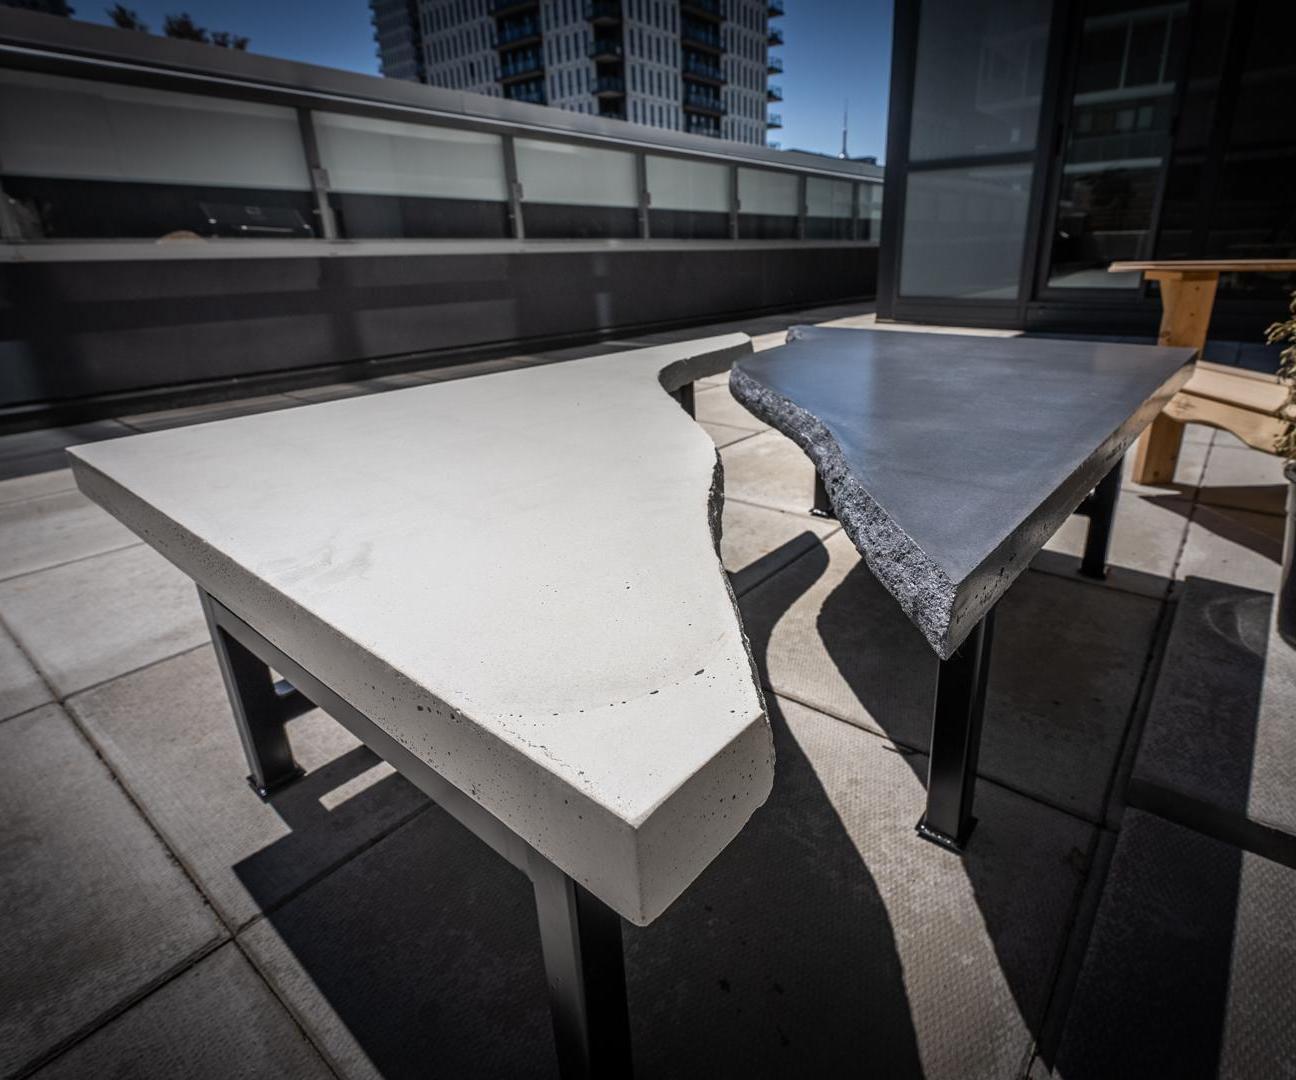 The Zero Wood Black and White Concrete Outdoor Table